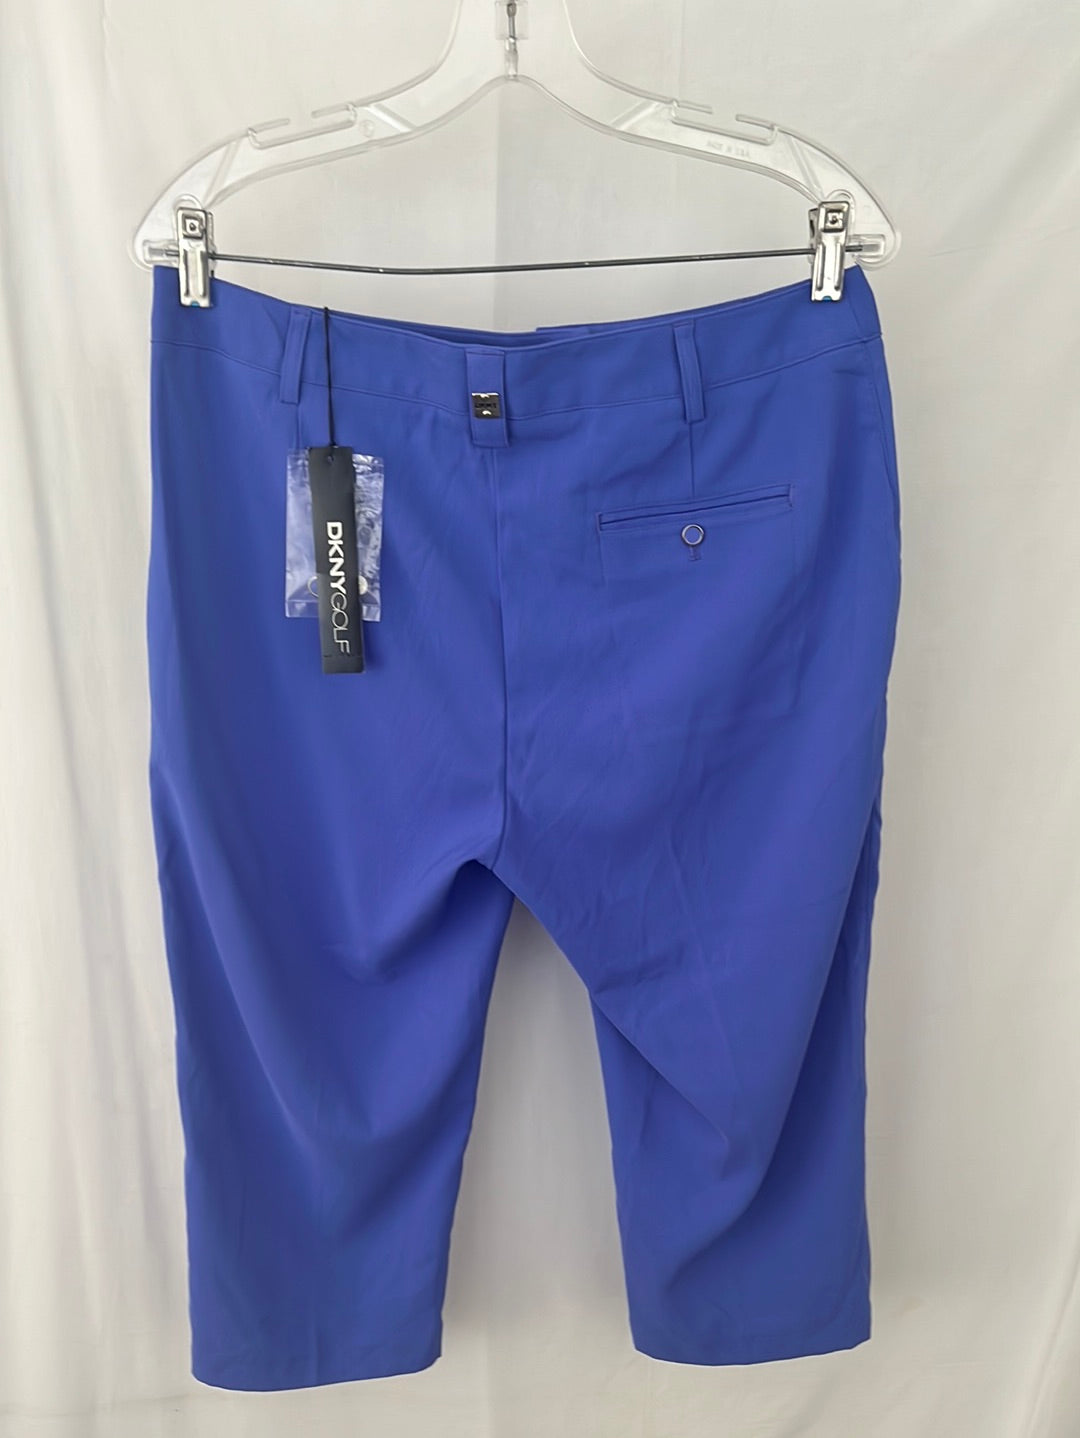 NWT -- DKNY Golf Blue Capri Pants -- 8